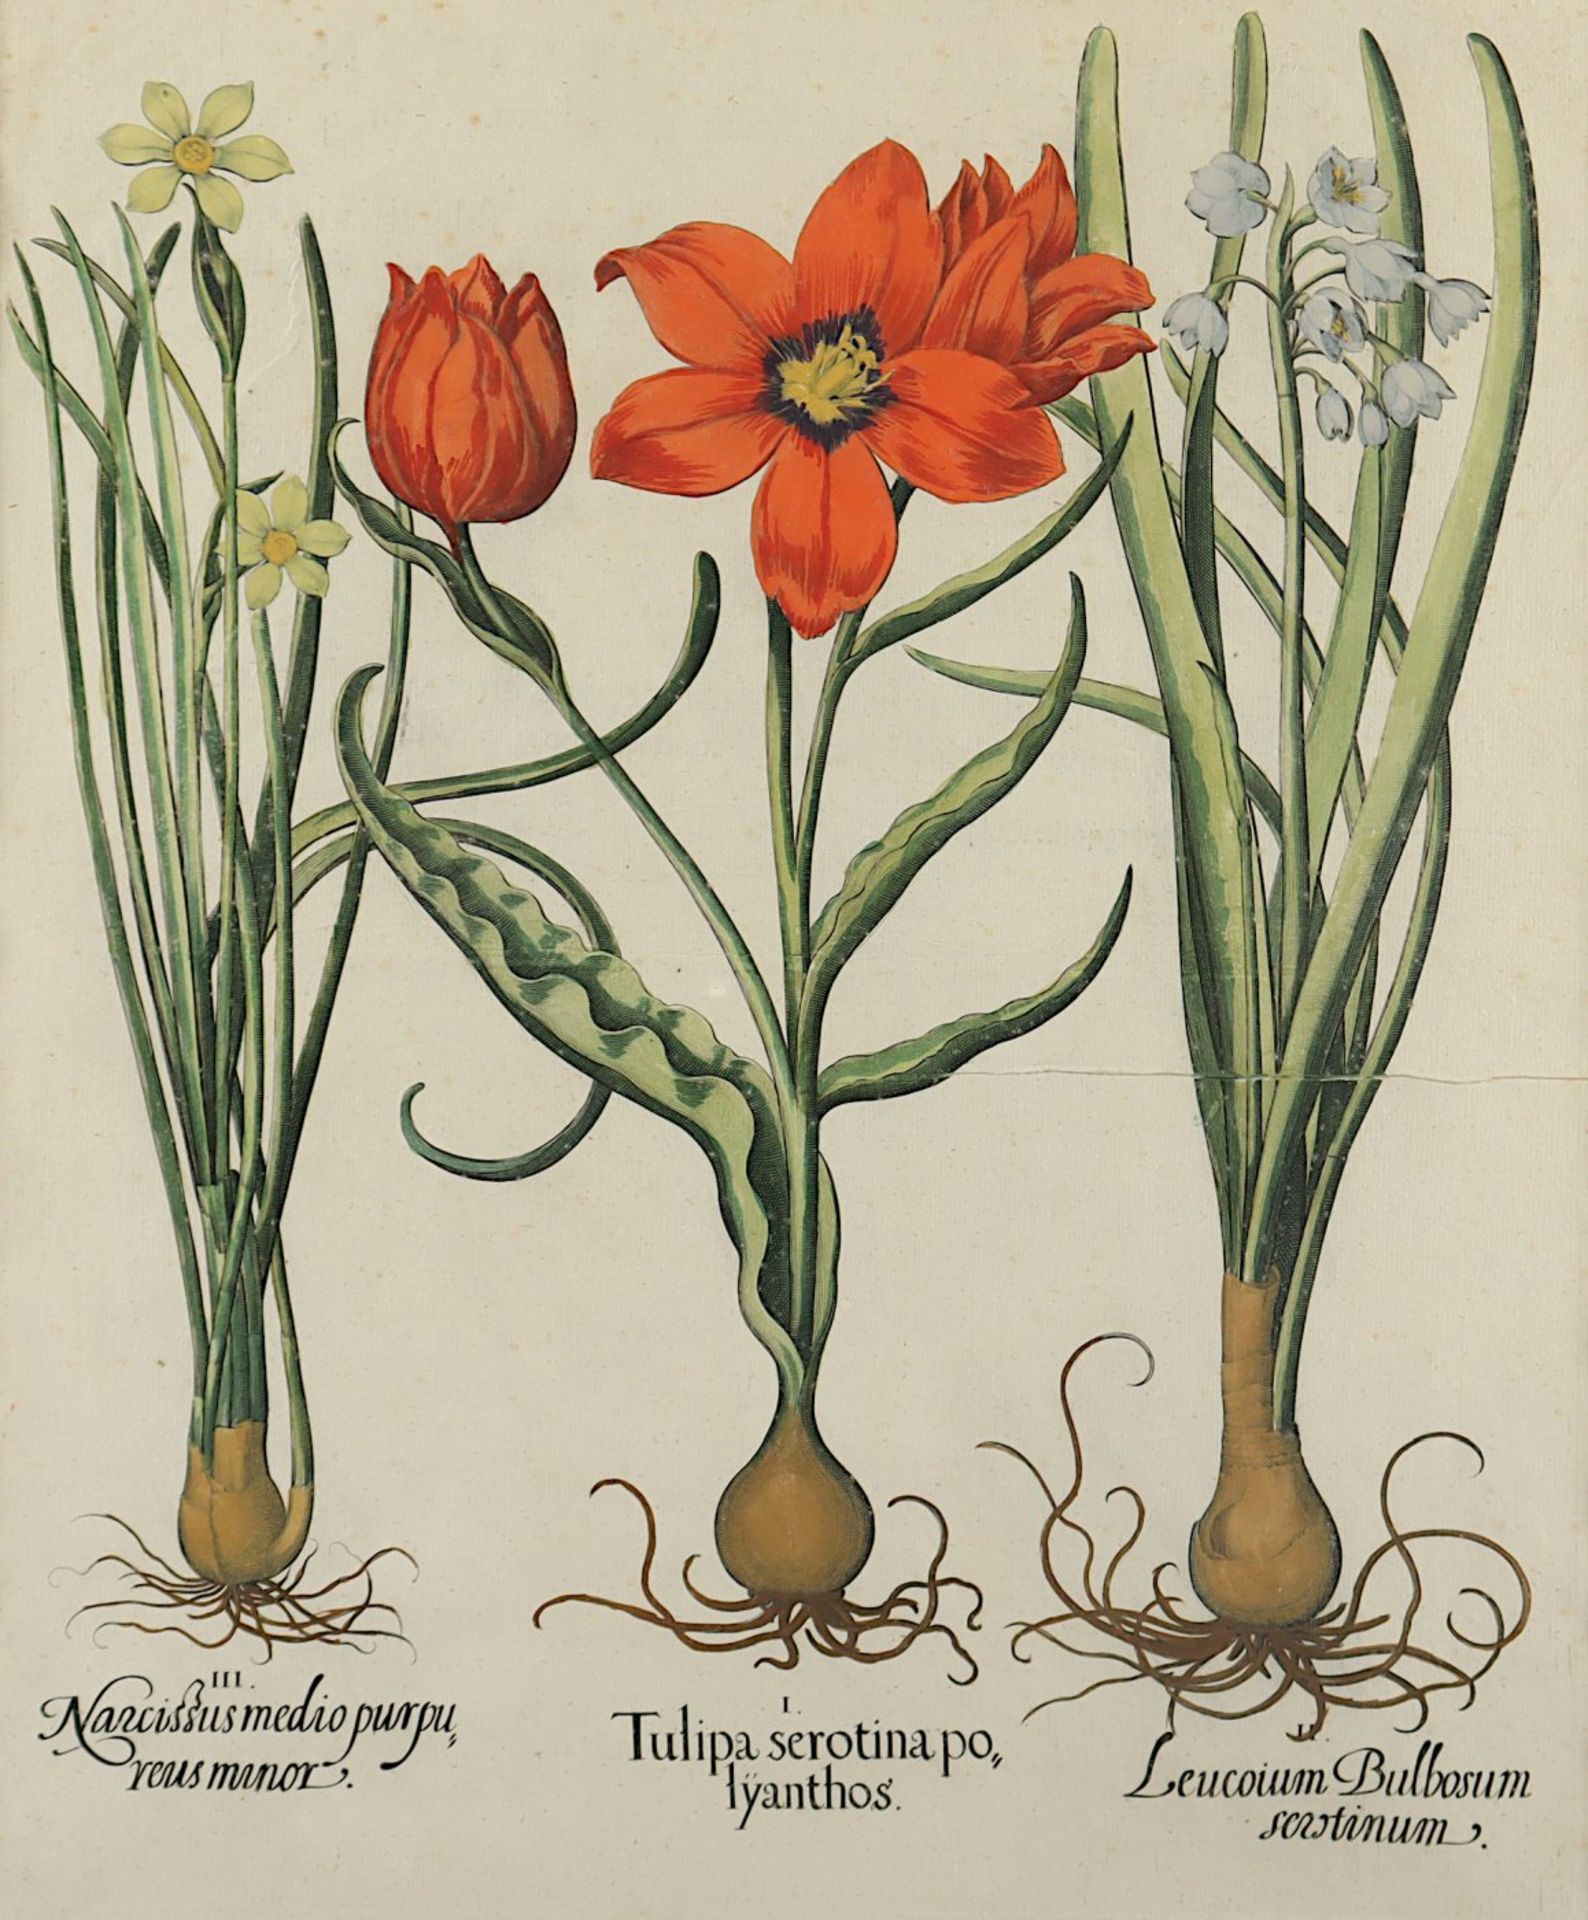 TULPEN - NARZISSE, "Tulipa serotina